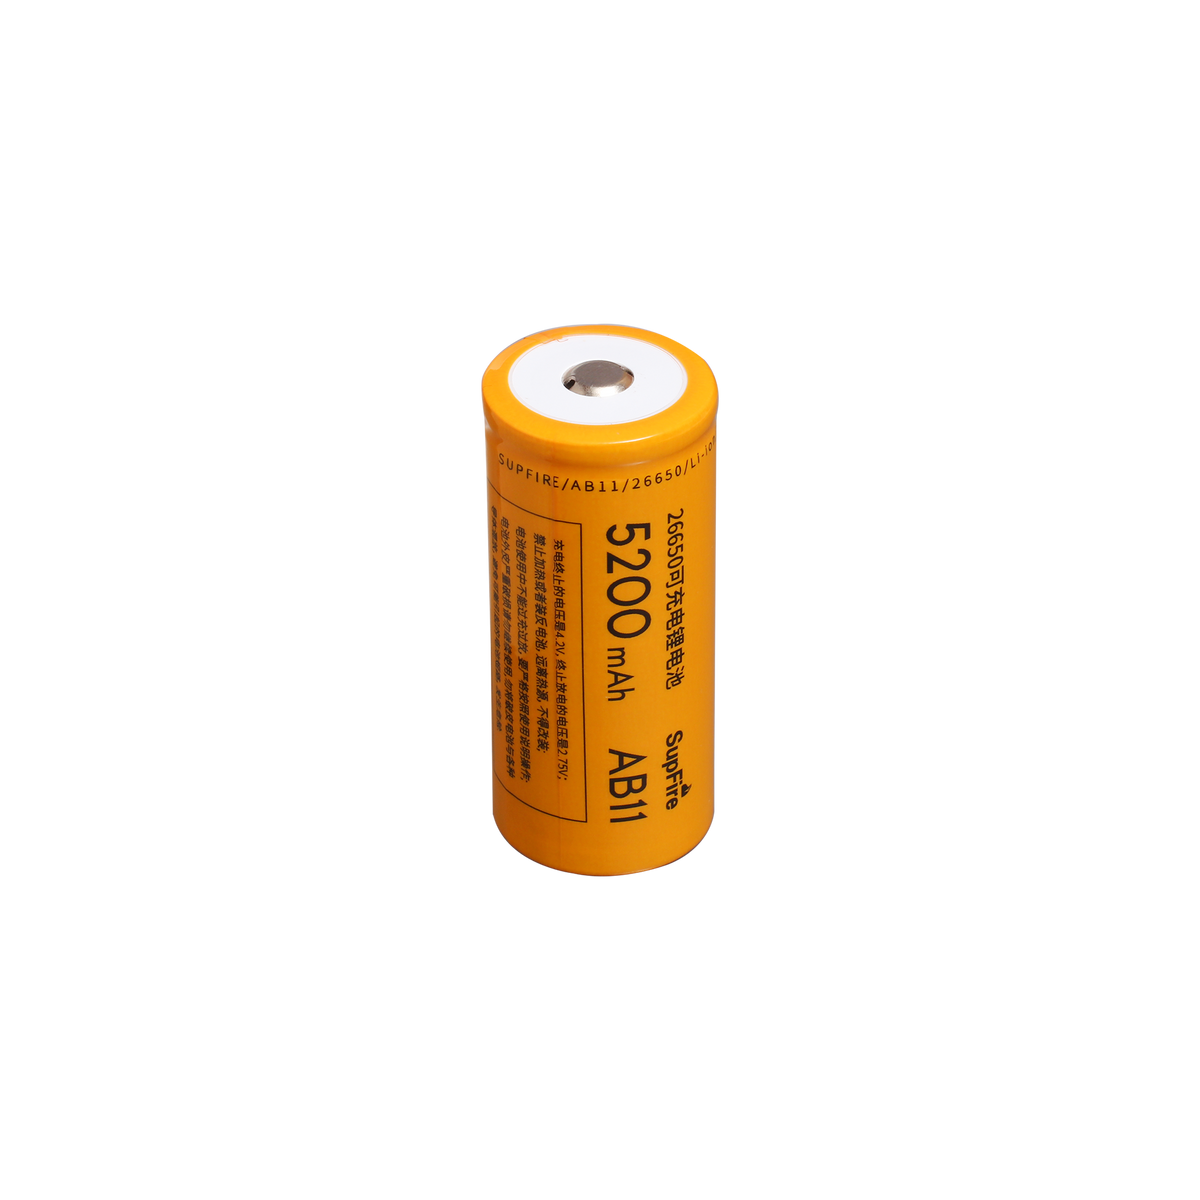 EFT-360 rechargeable batteries